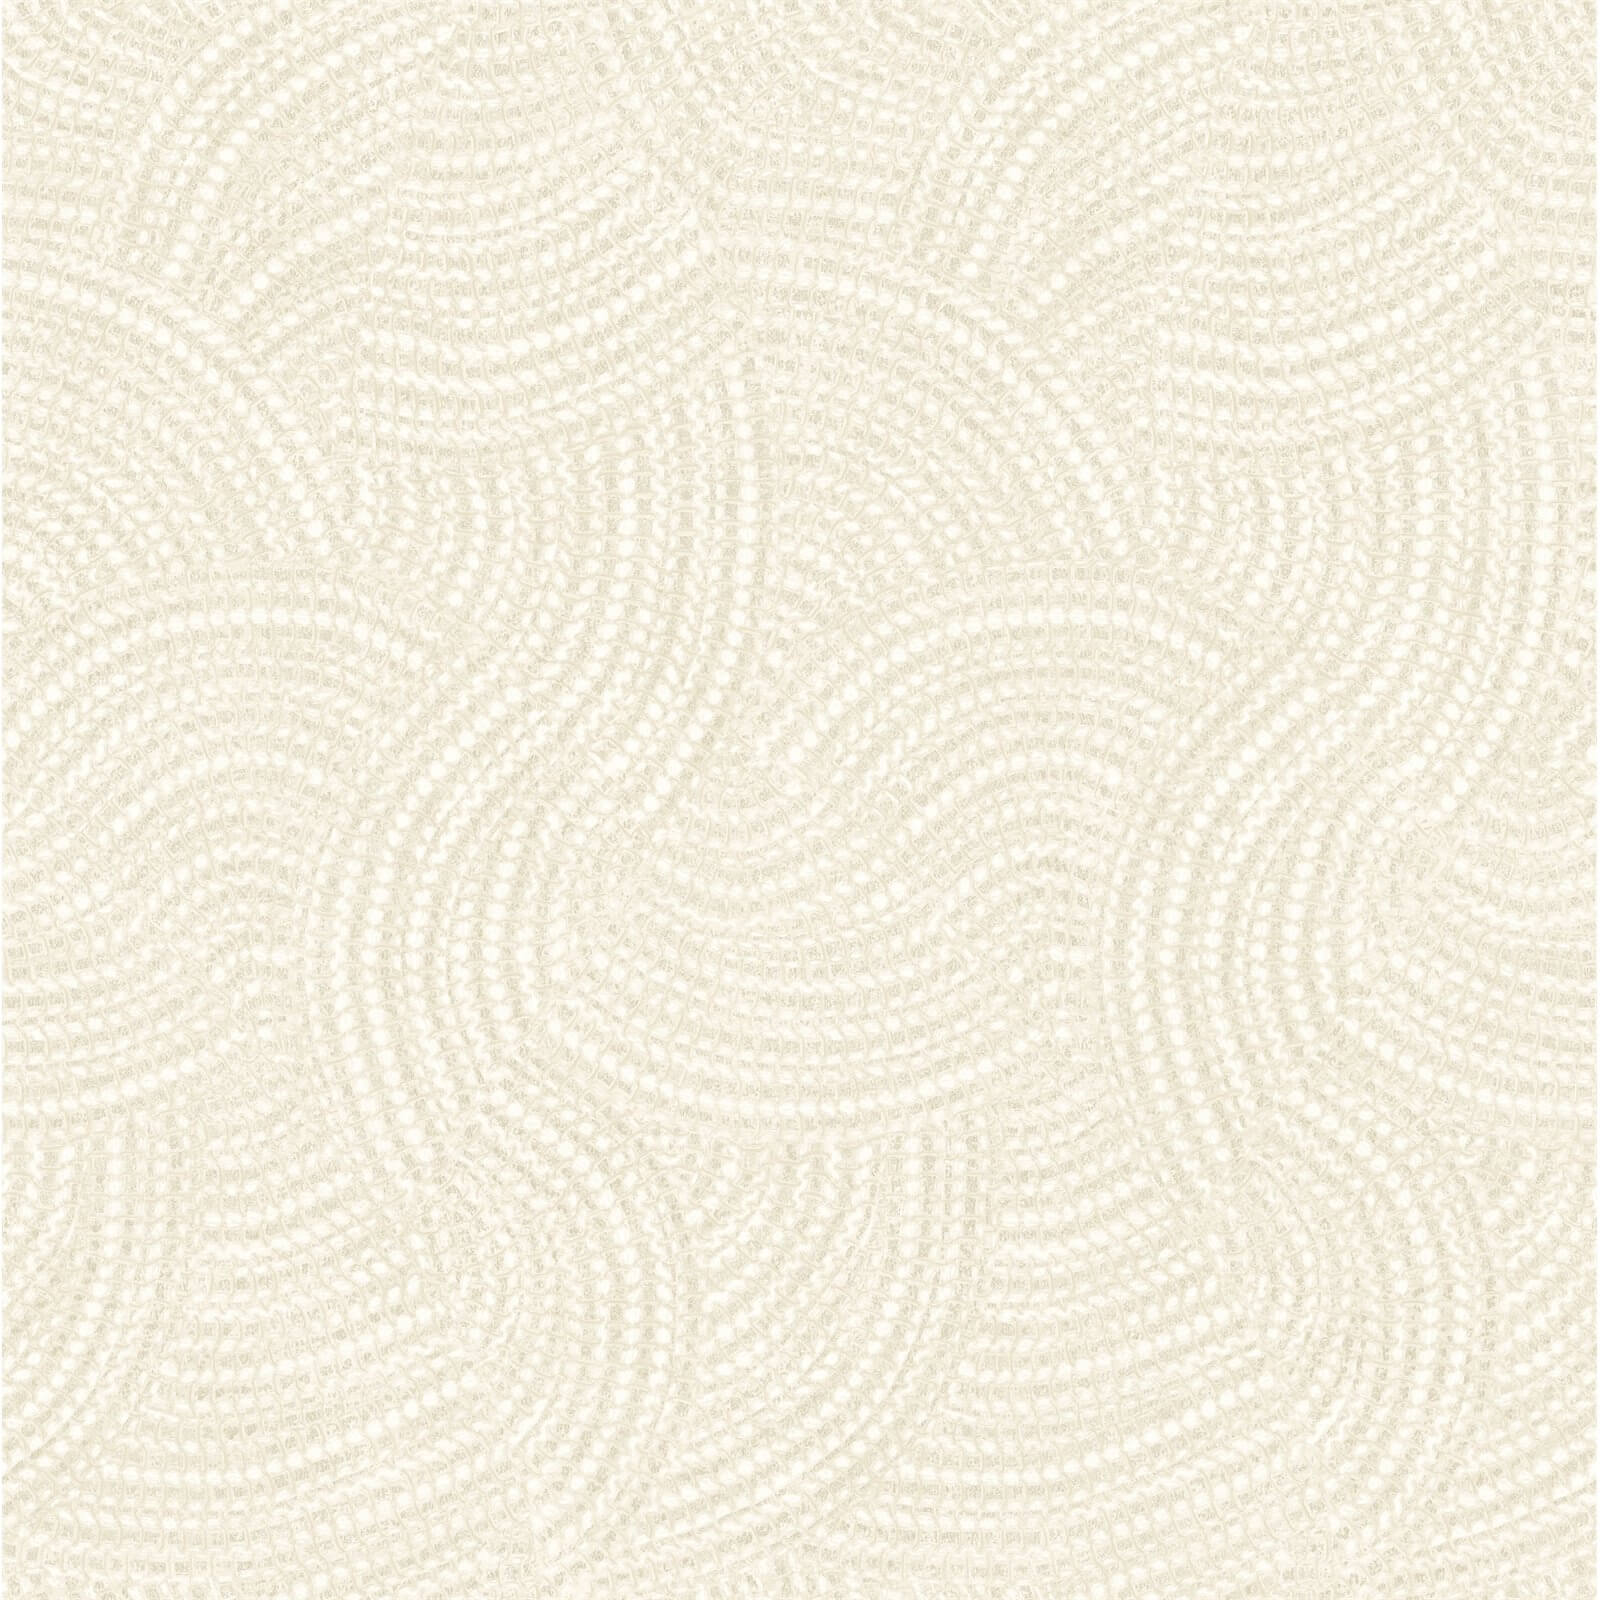 Holden Decor Pave Plain Embossed Metallic Cream and Gold Wallpaper